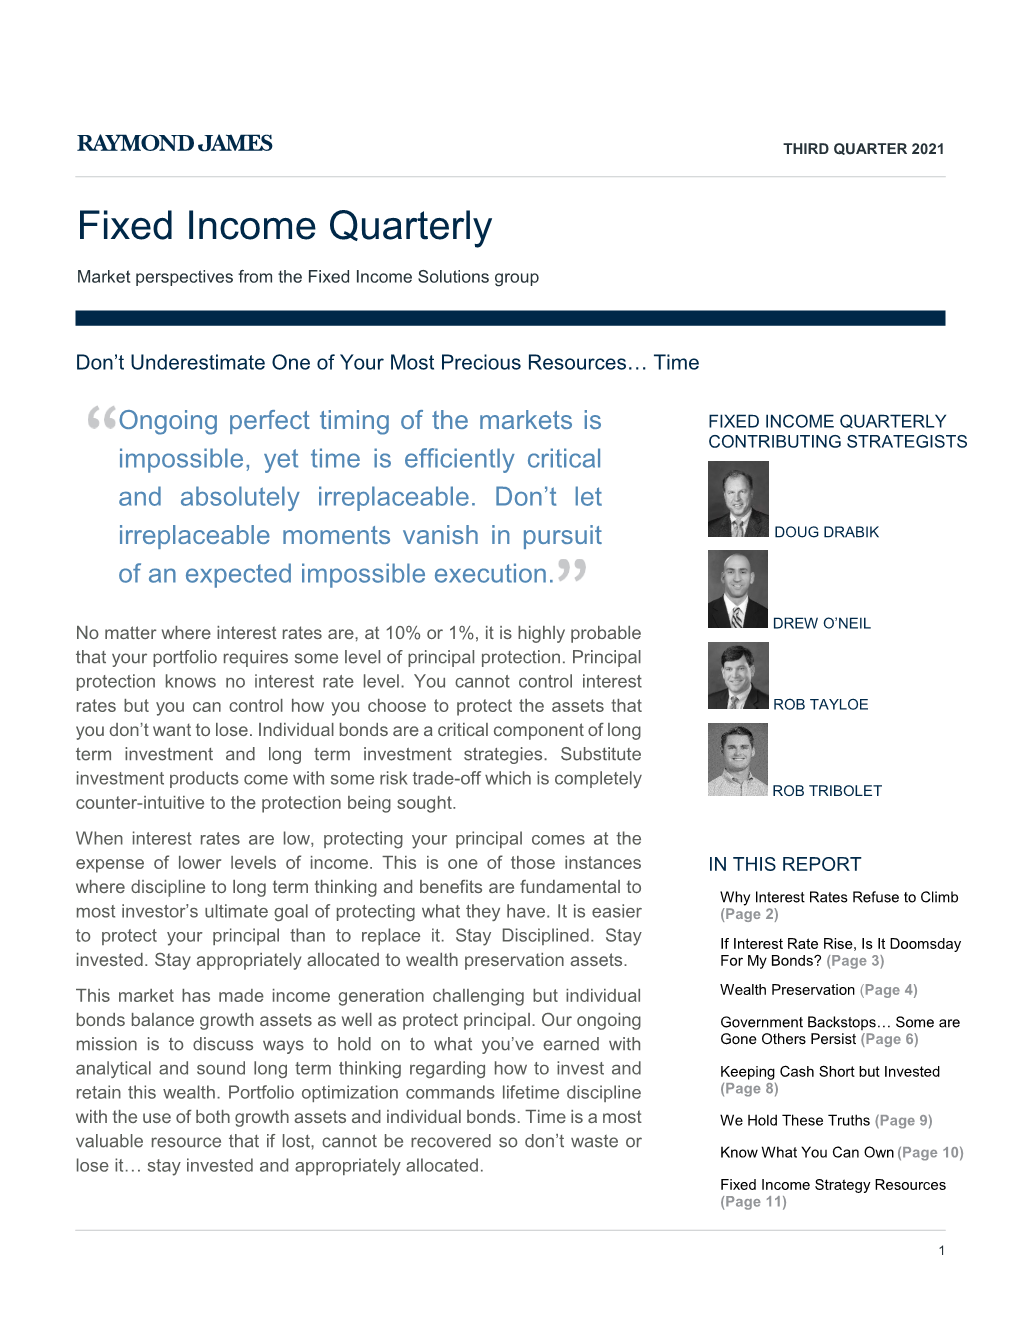 Fixed Income Quarterly